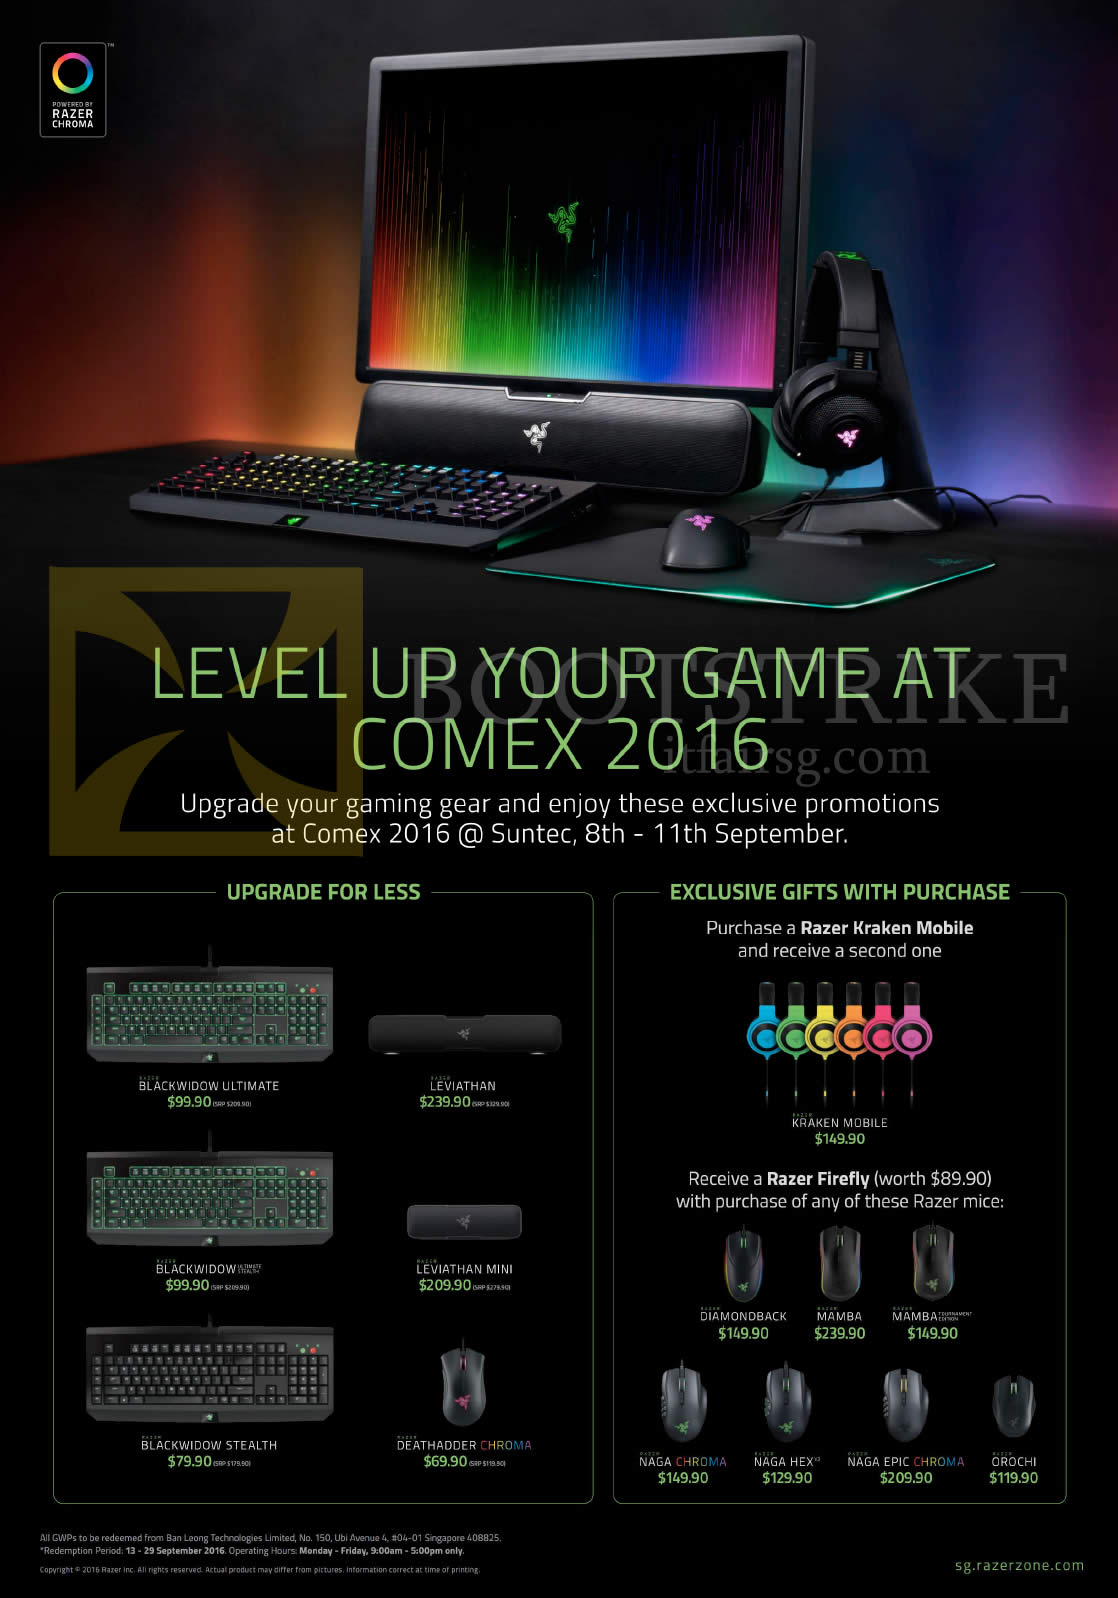 COMEX 2016 price list image brochure of Razer Keyboards, Mouse, Blackwidow Ultimate, Stealth, Kraken Mobile, DiamondBack, Mamba, Naga Chrona, Naga Hex